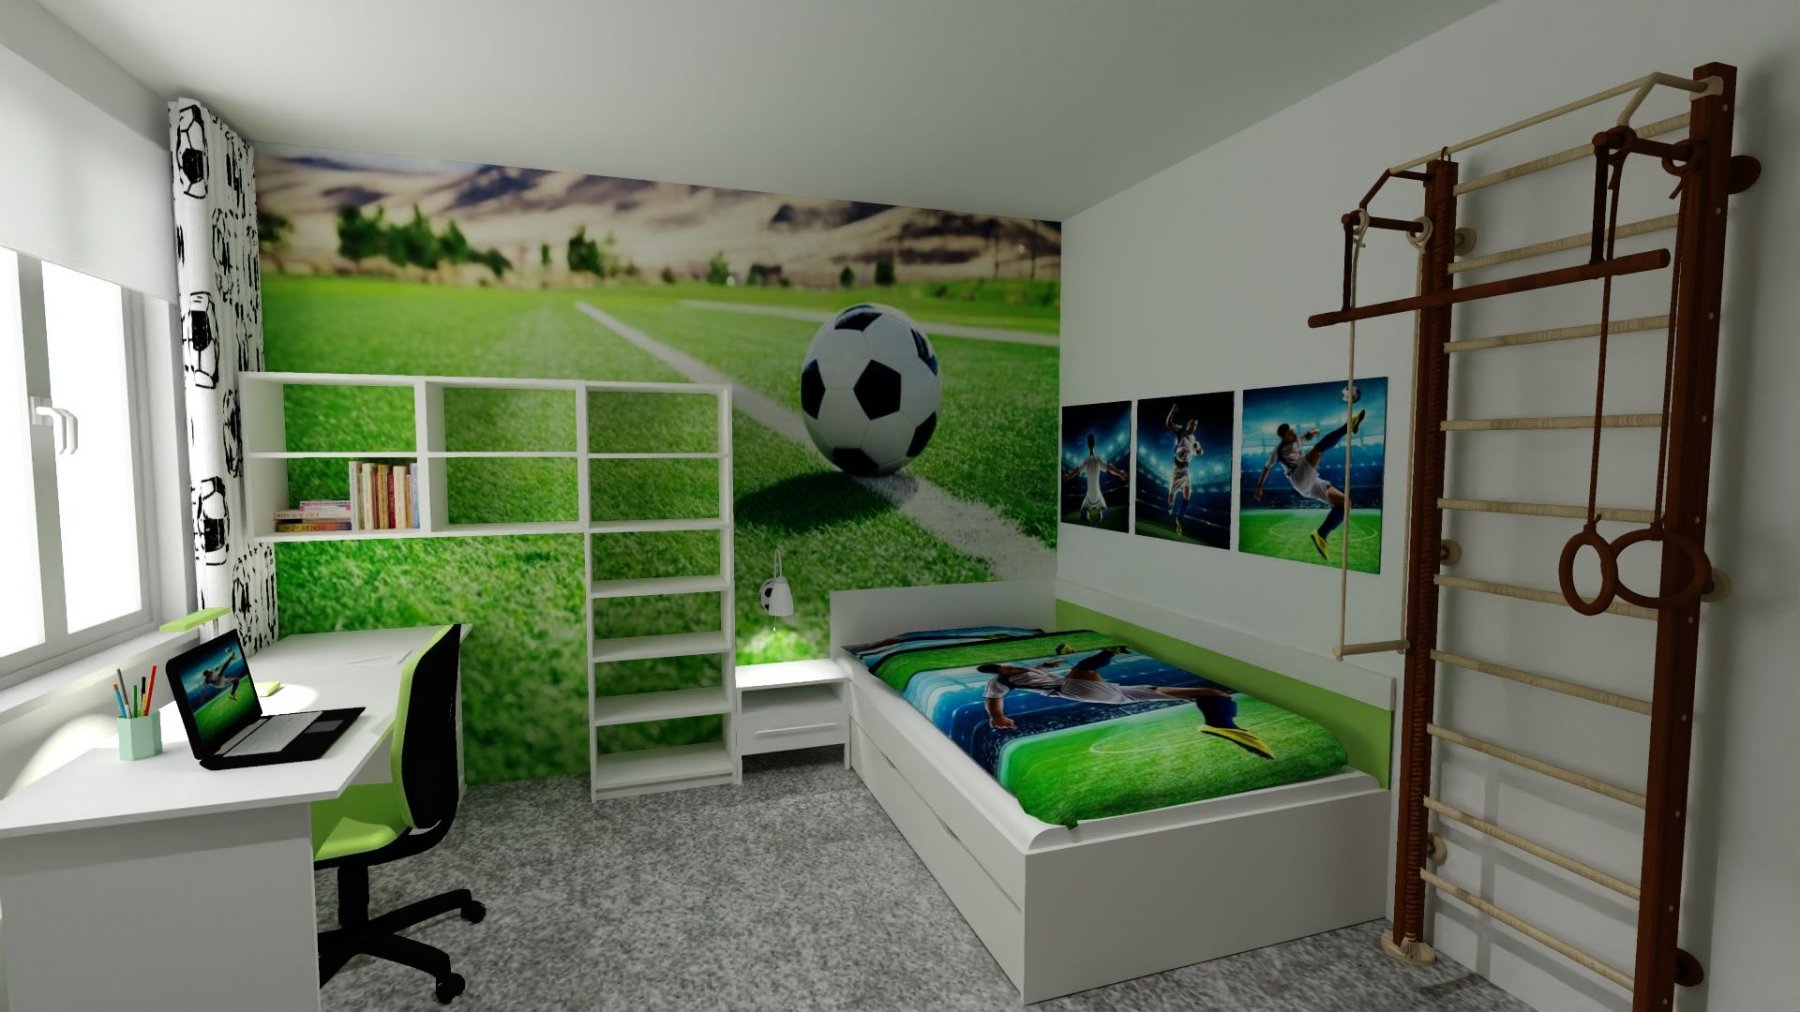 _3_detsky_pokoj_fotbalovy.jpg - Interiérový design & 3D vizualizace